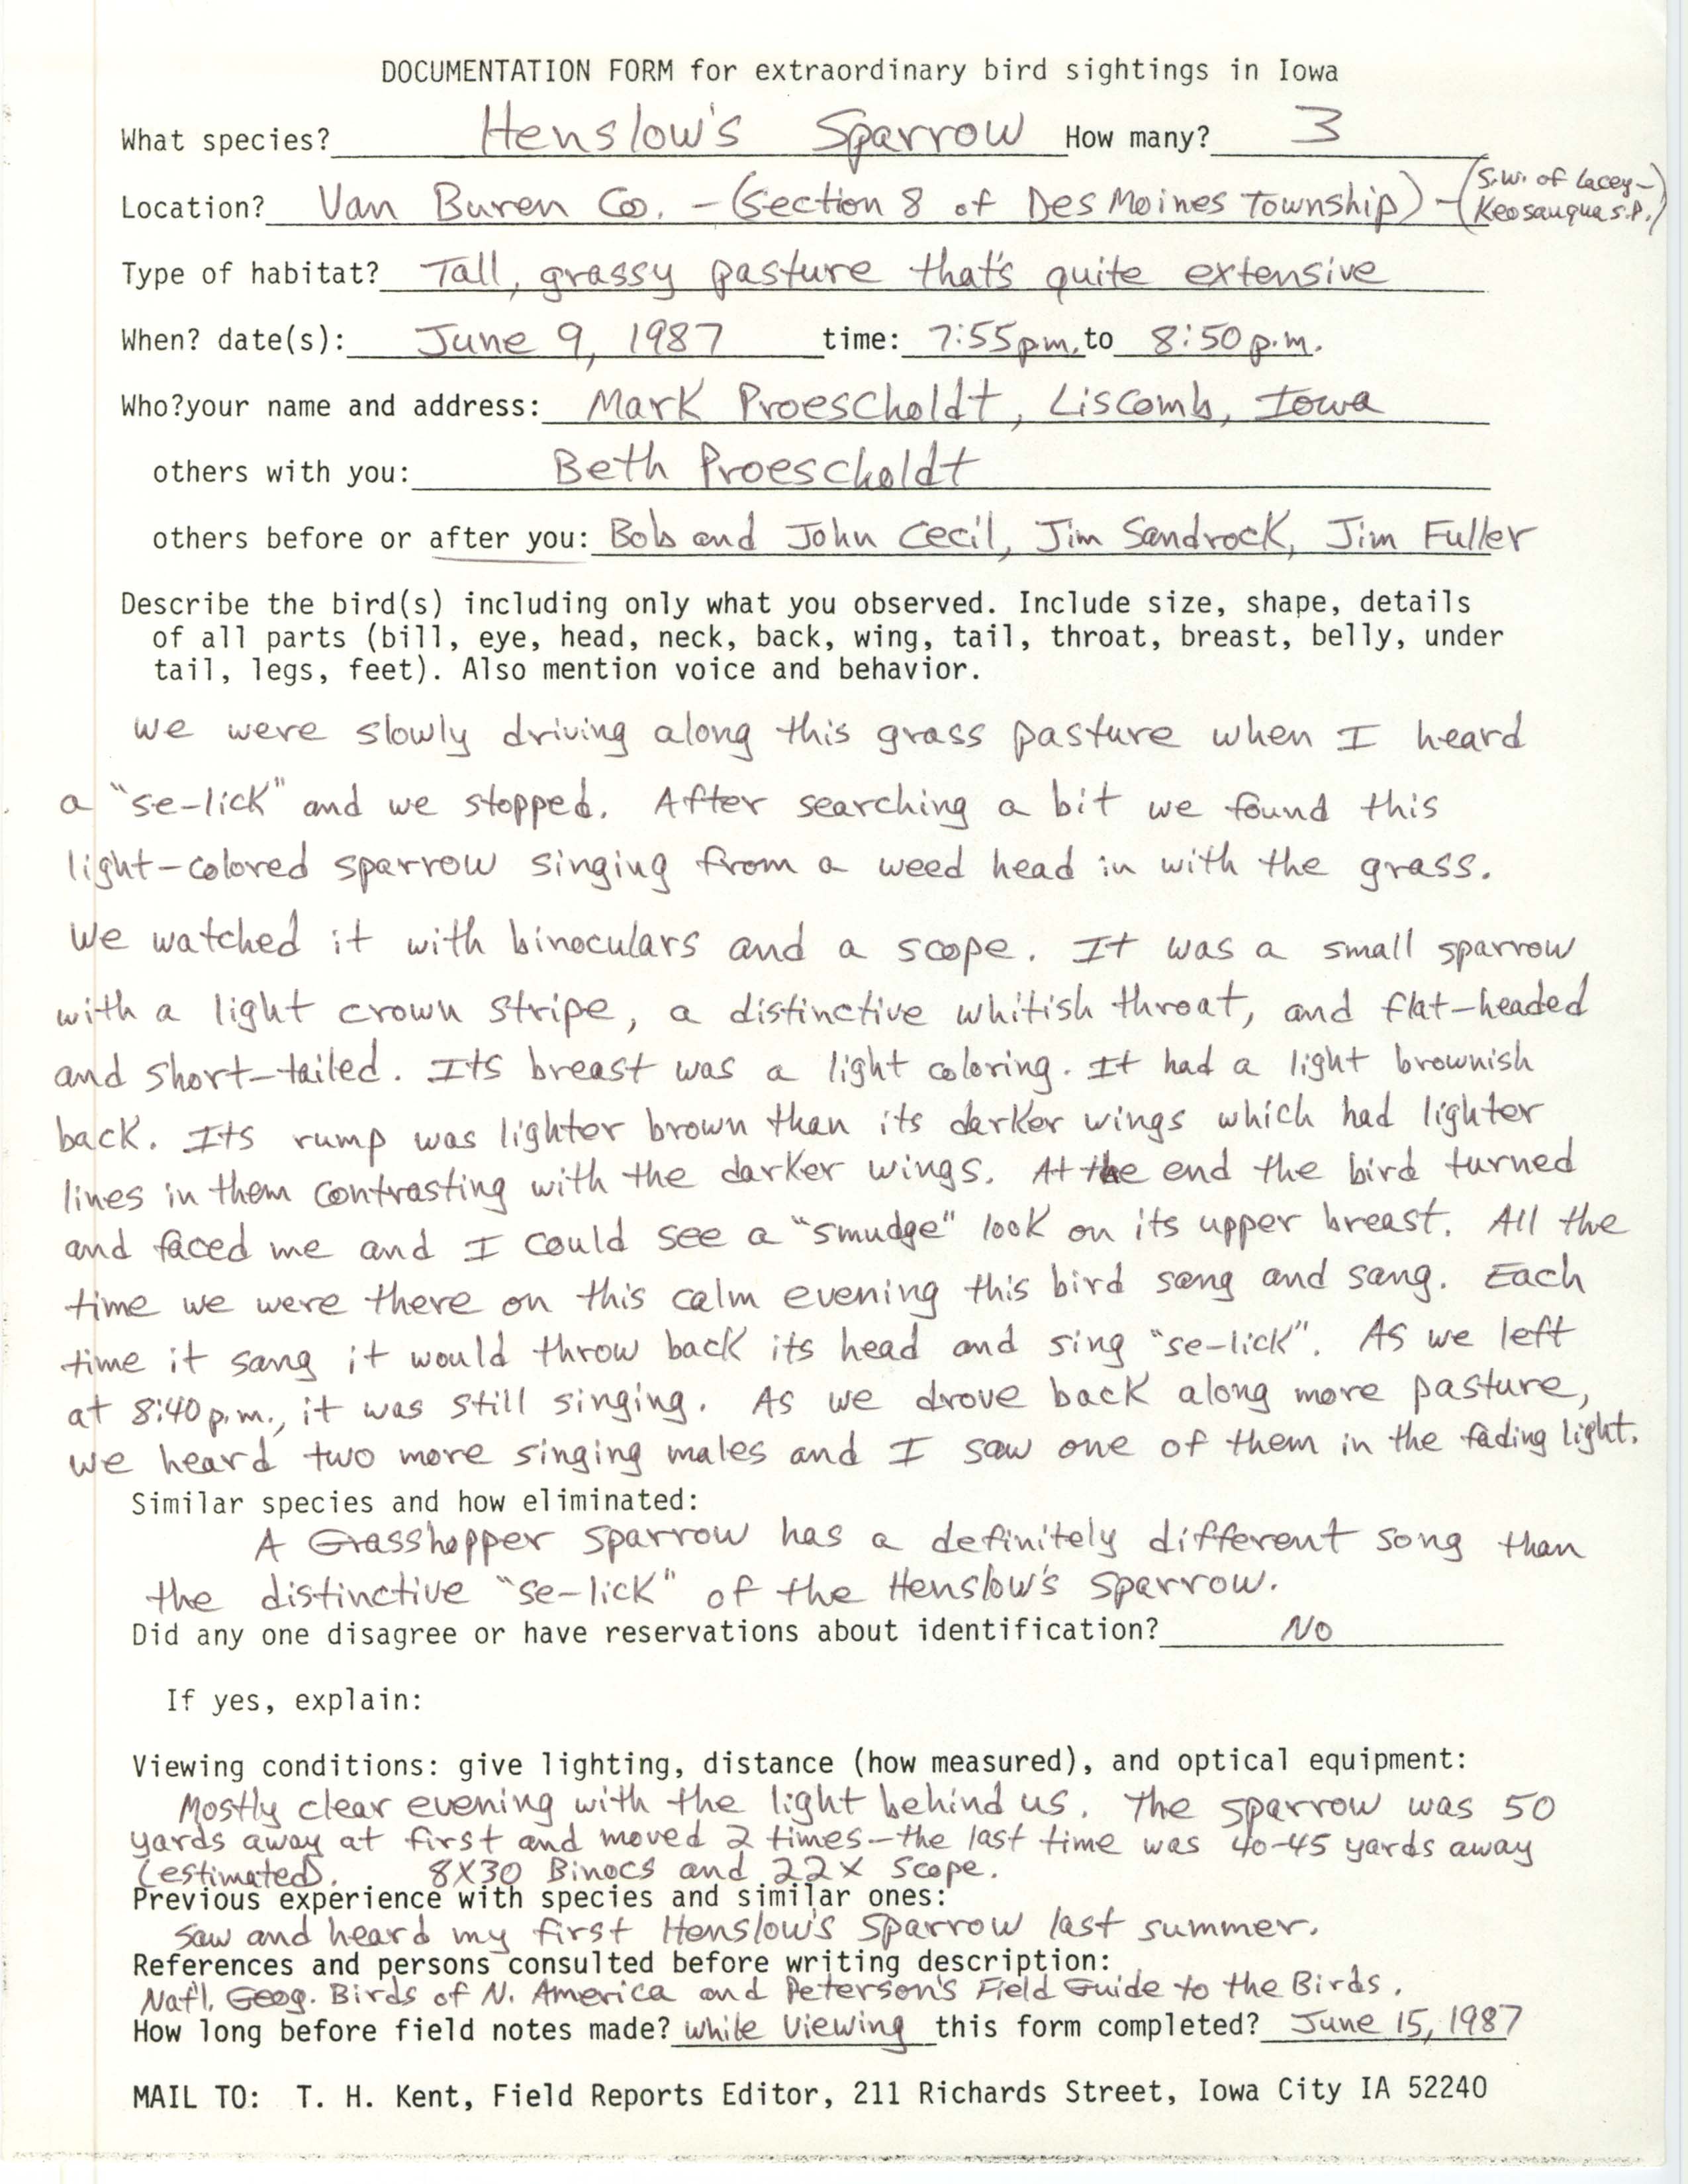 Rare bird documentation form for Henslow's Sparrow at Des Moines Township in Van Buren County, 1987